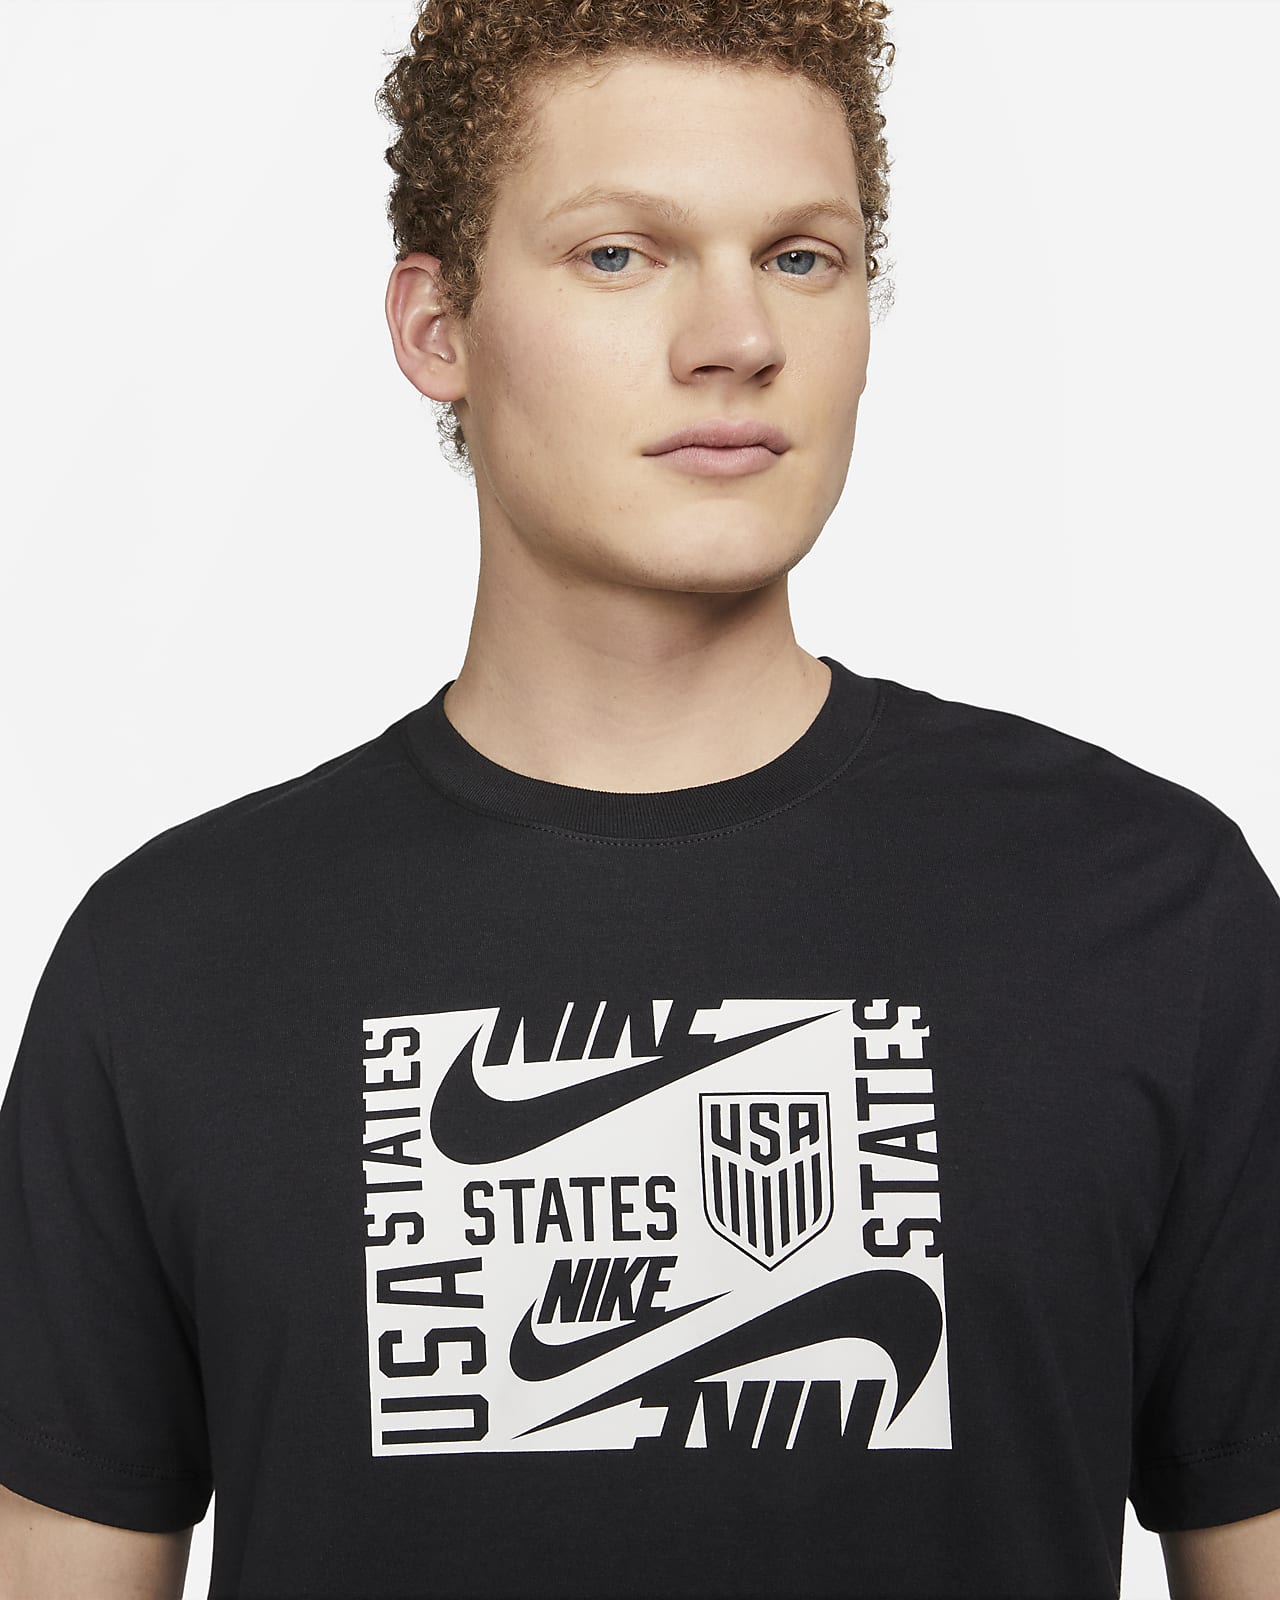 cliff Subjective canvas U.S. Men's Graphic T-Shirt. Nike.com